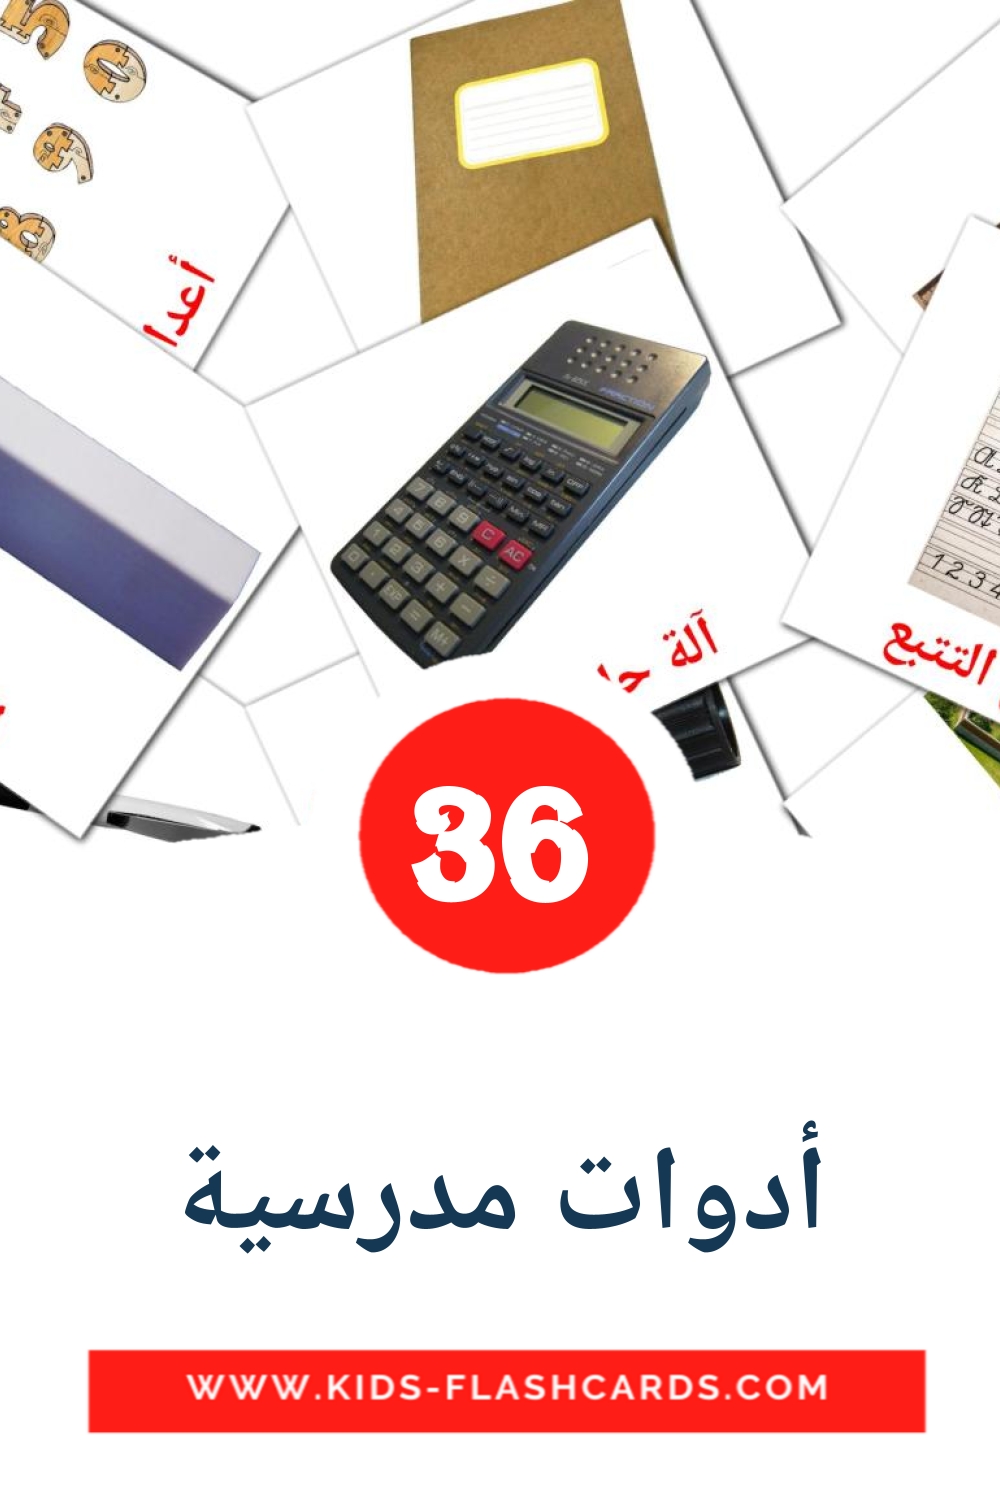 36 أدوات مدرسية Picture Cards for Kindergarden in arabic